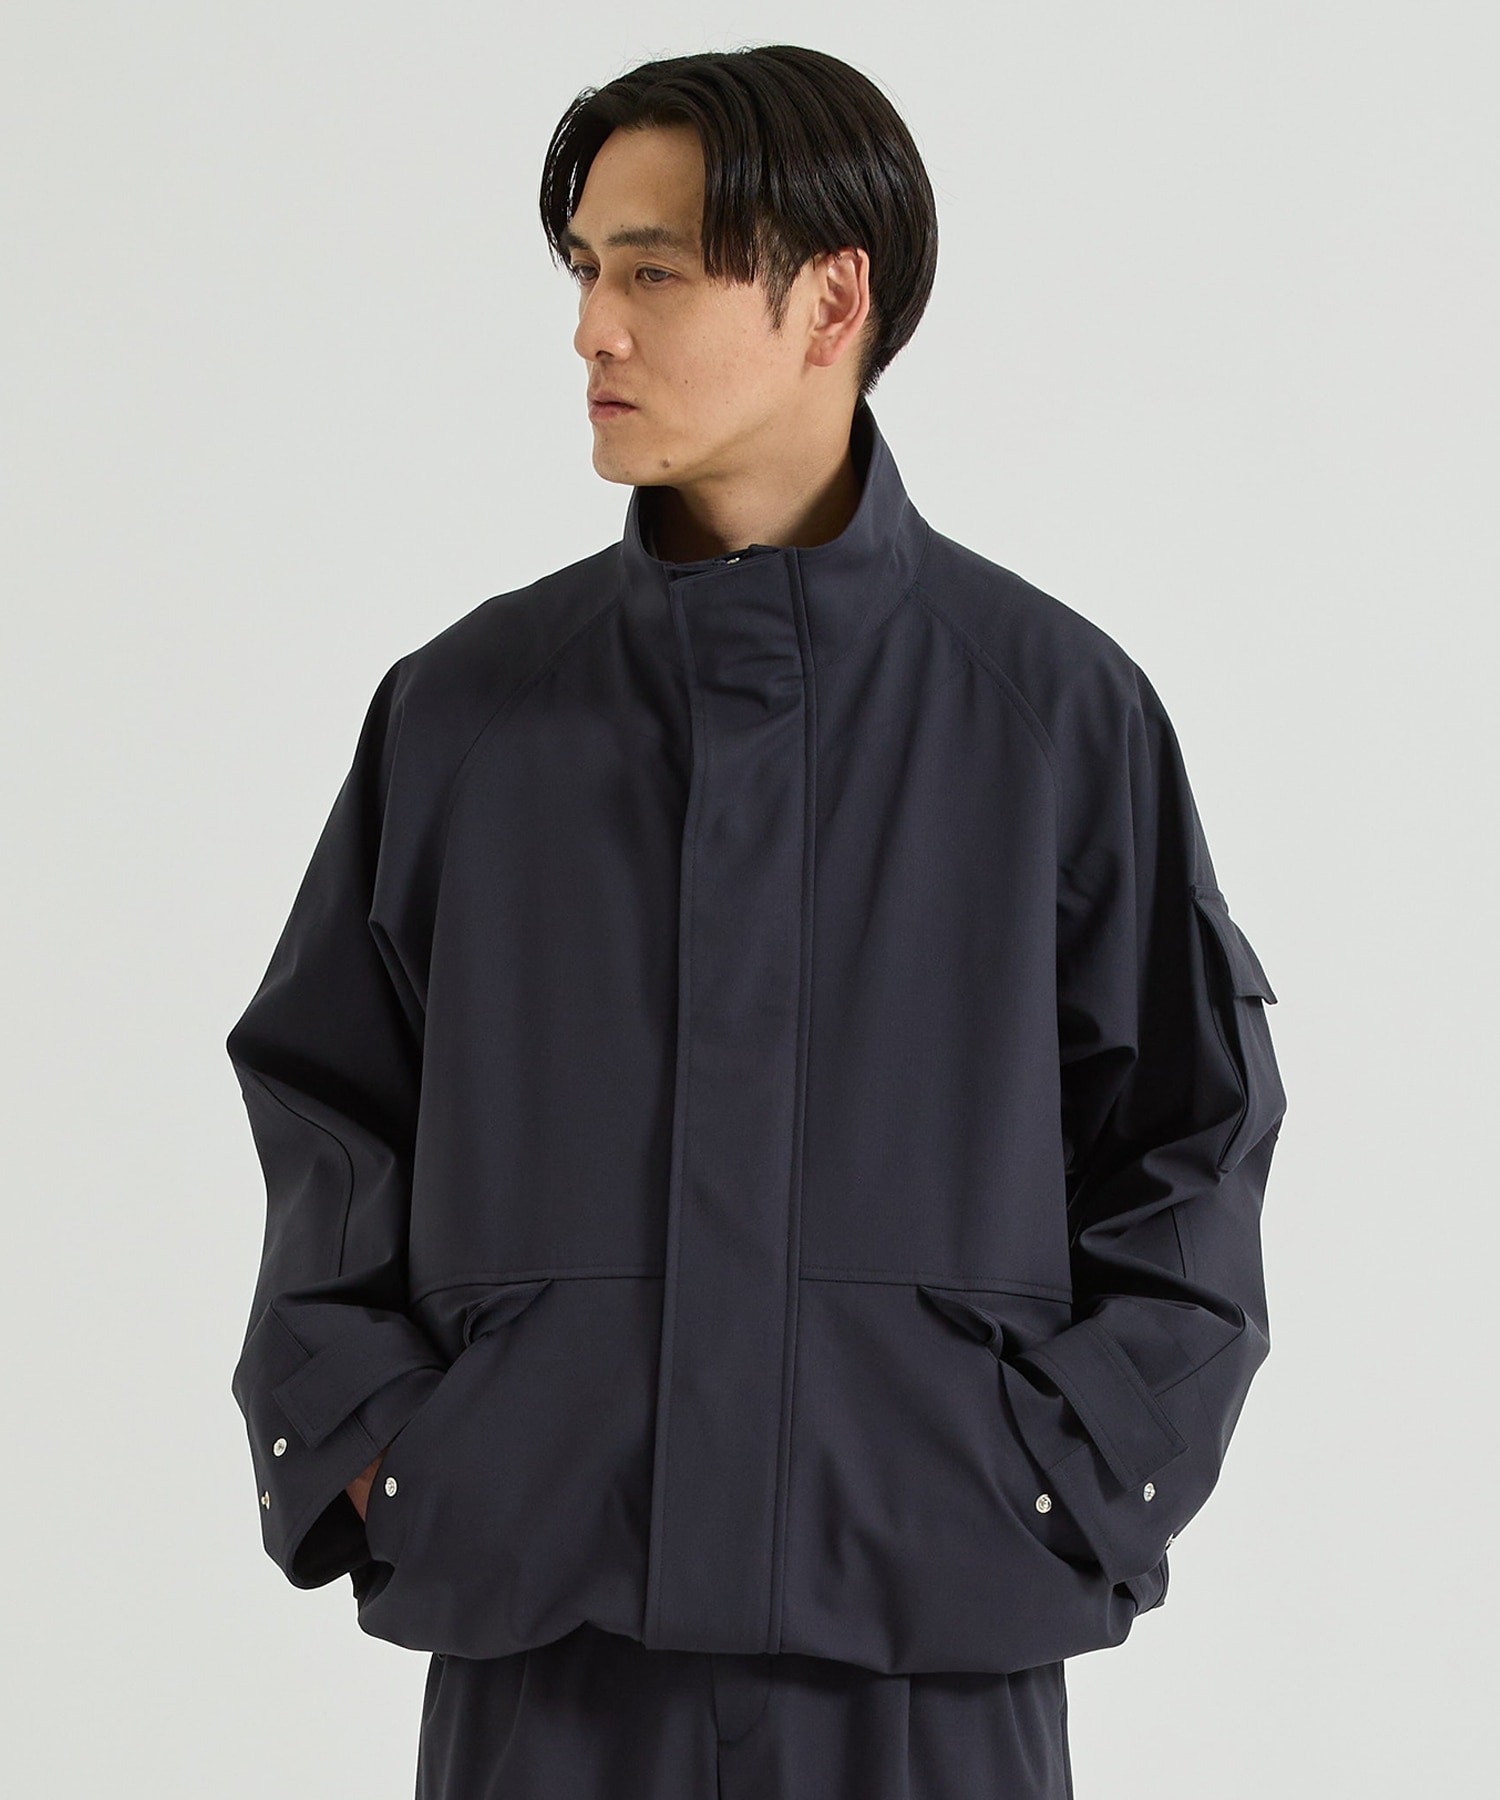 WTRK Wool Nylon Bonding Type ECWCS Jacket